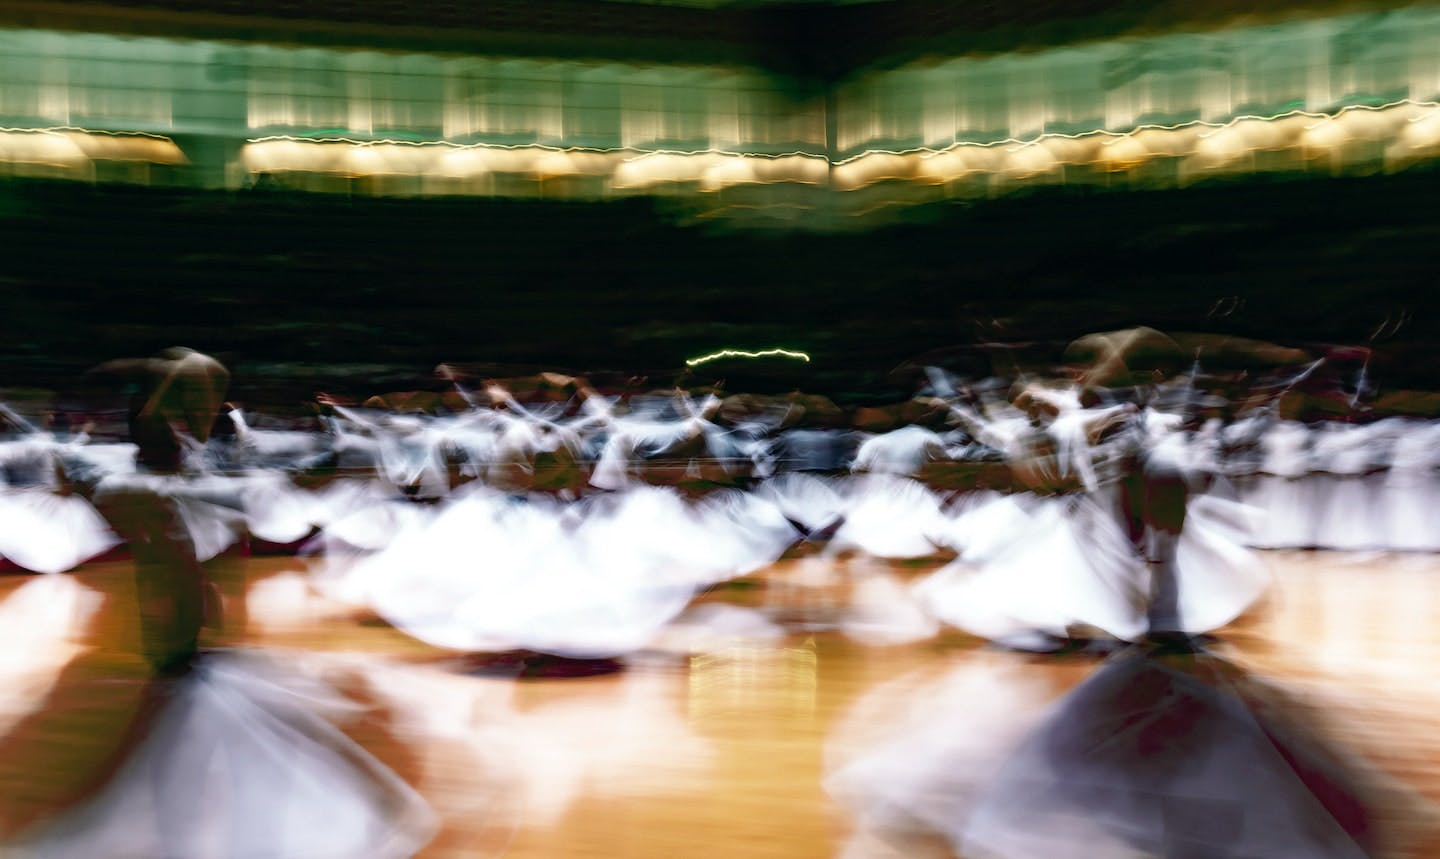 kinetic dance still photo on large ballroom floor